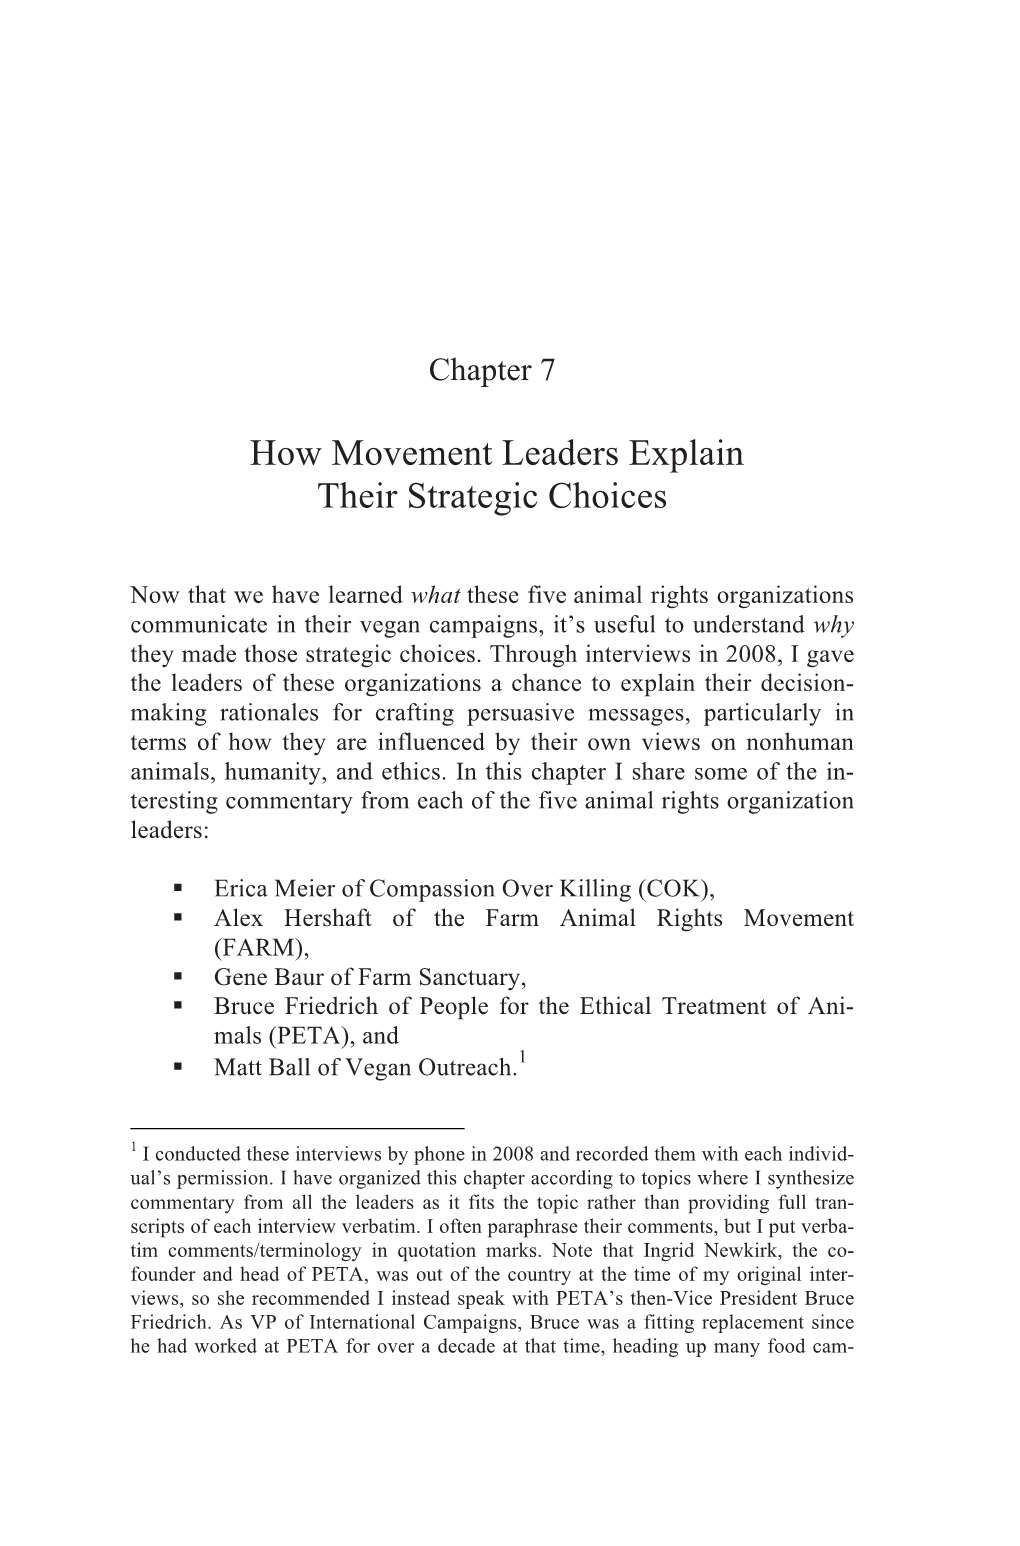 How Movement Leaders Explain Their Strategic Choices